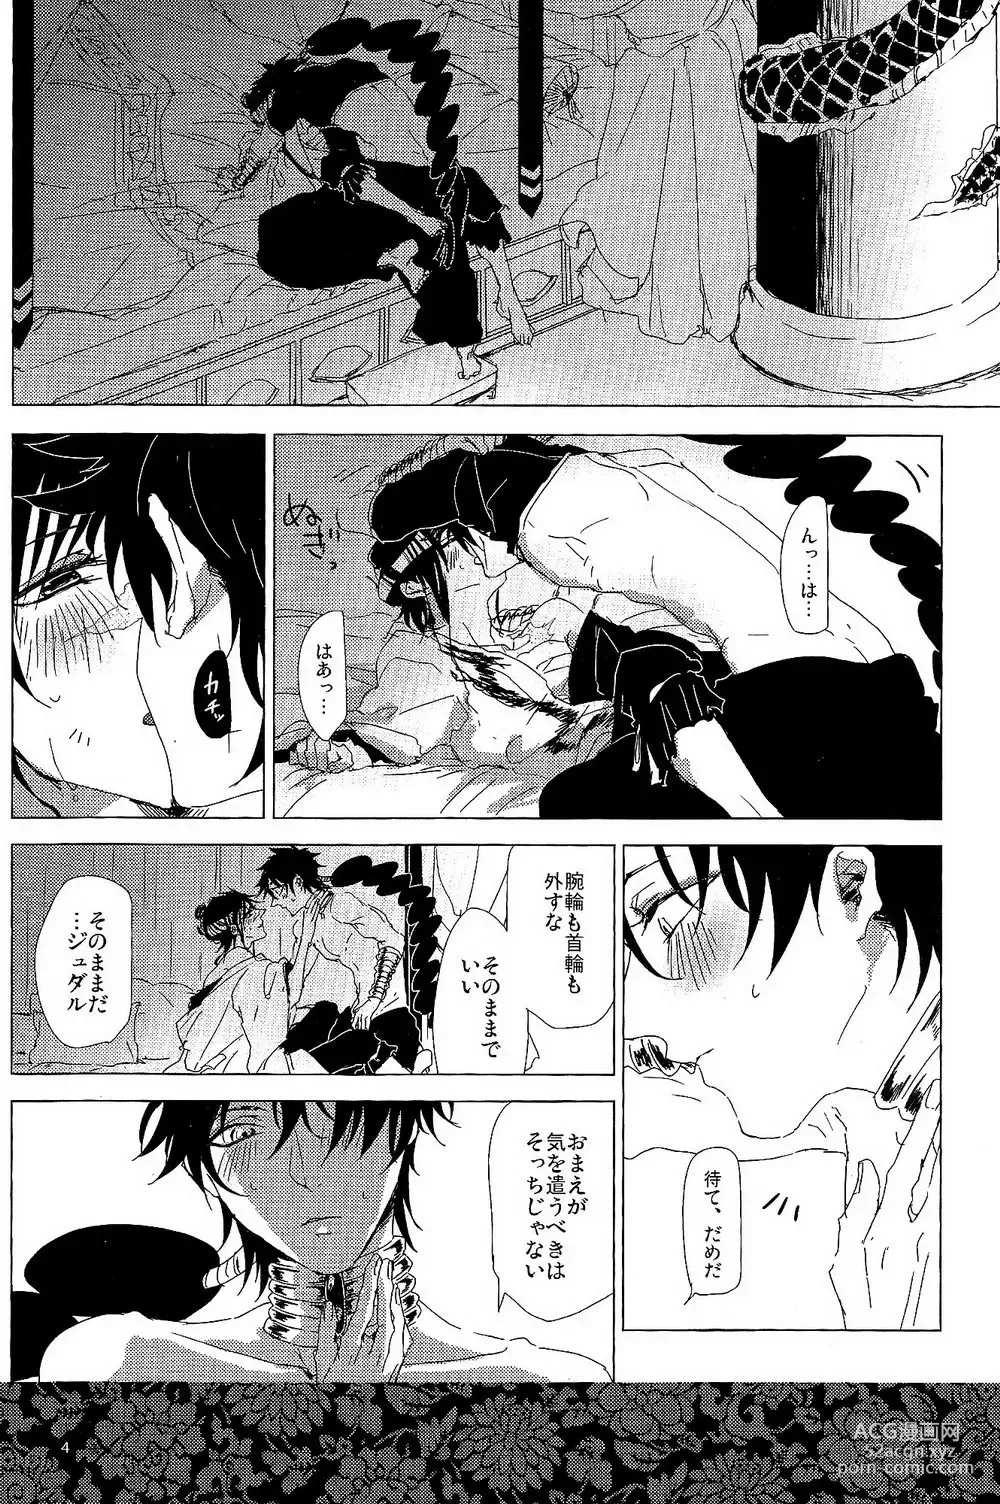 Page 3 of doujinshi 1064℃